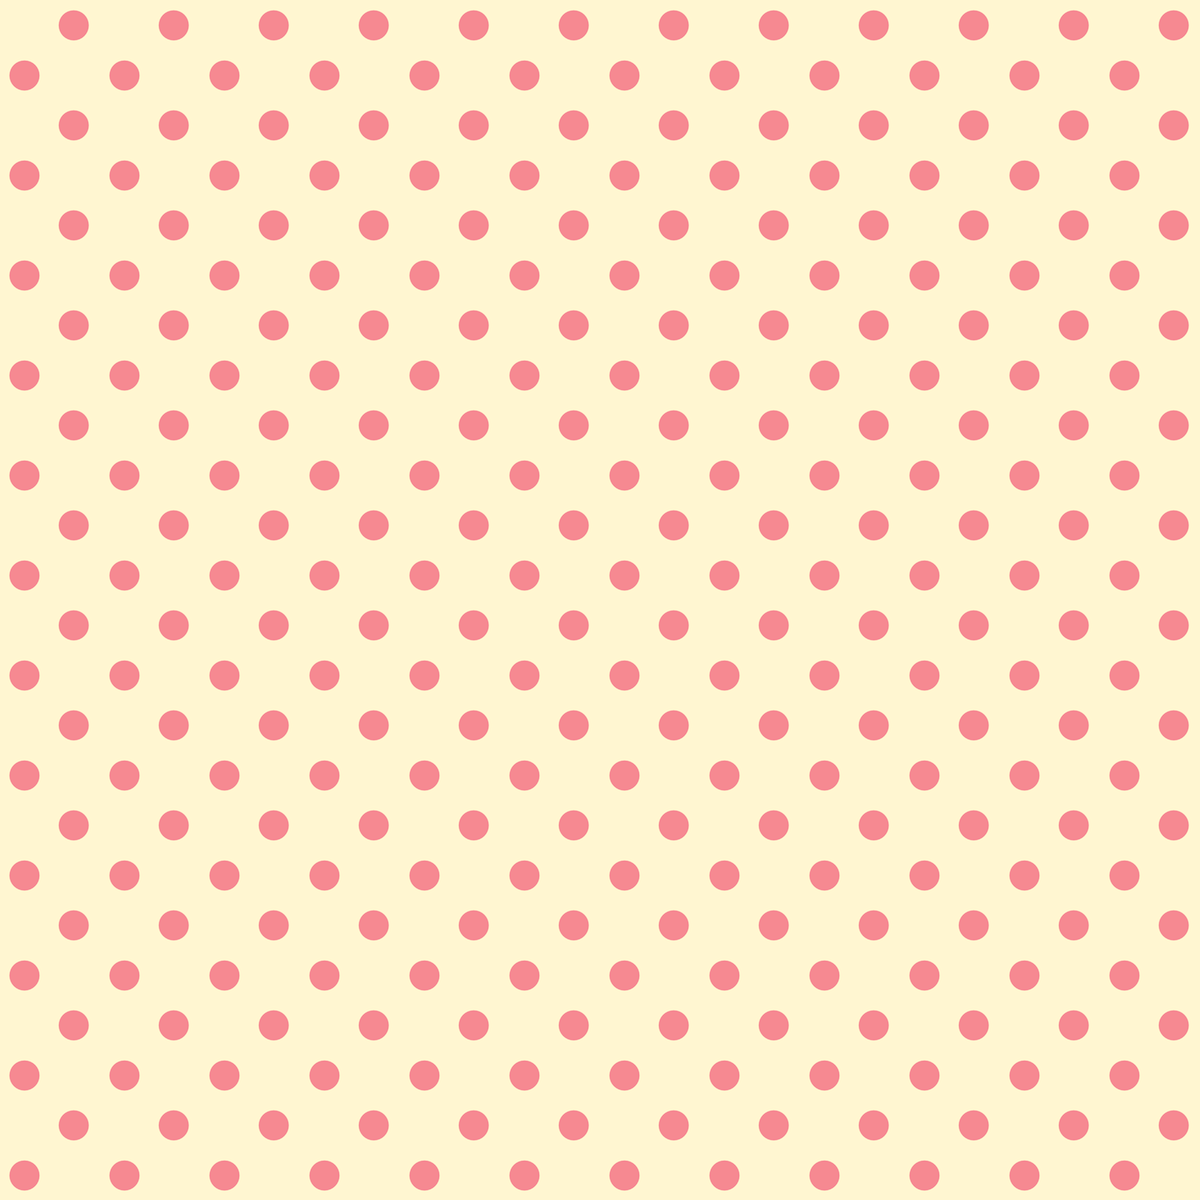 Another free digital polka dot scrapbooking paper set ...